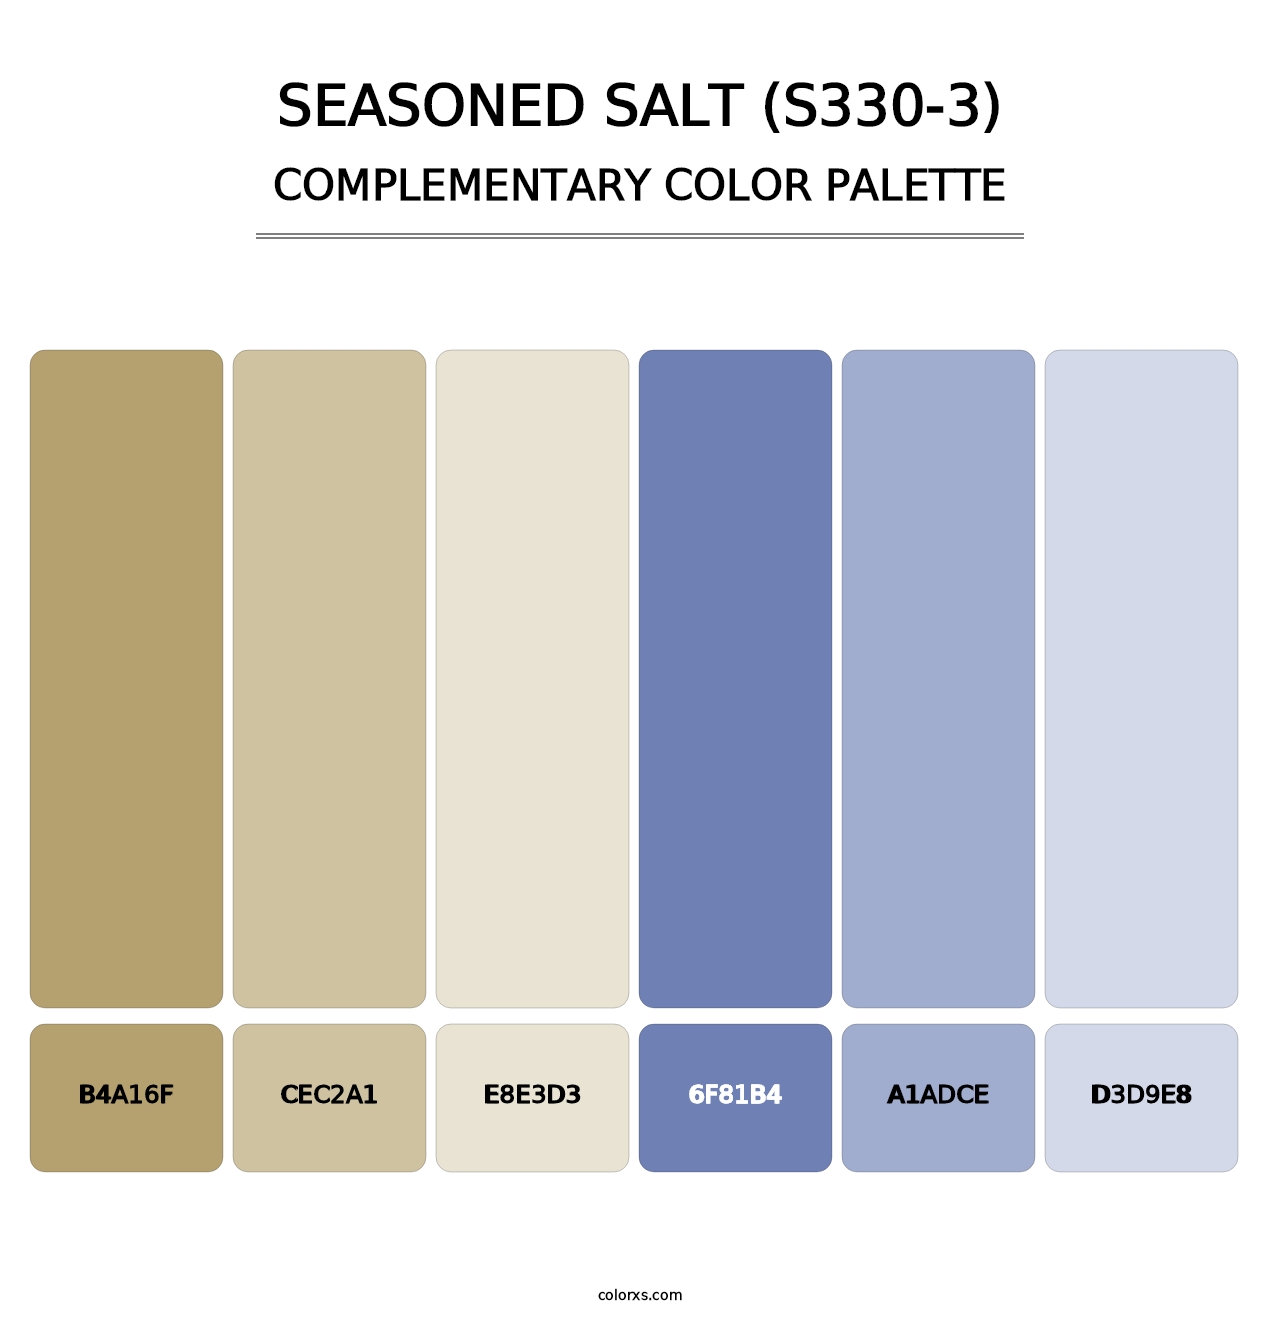 Seasoned Salt (S330-3) - Complementary Color Palette